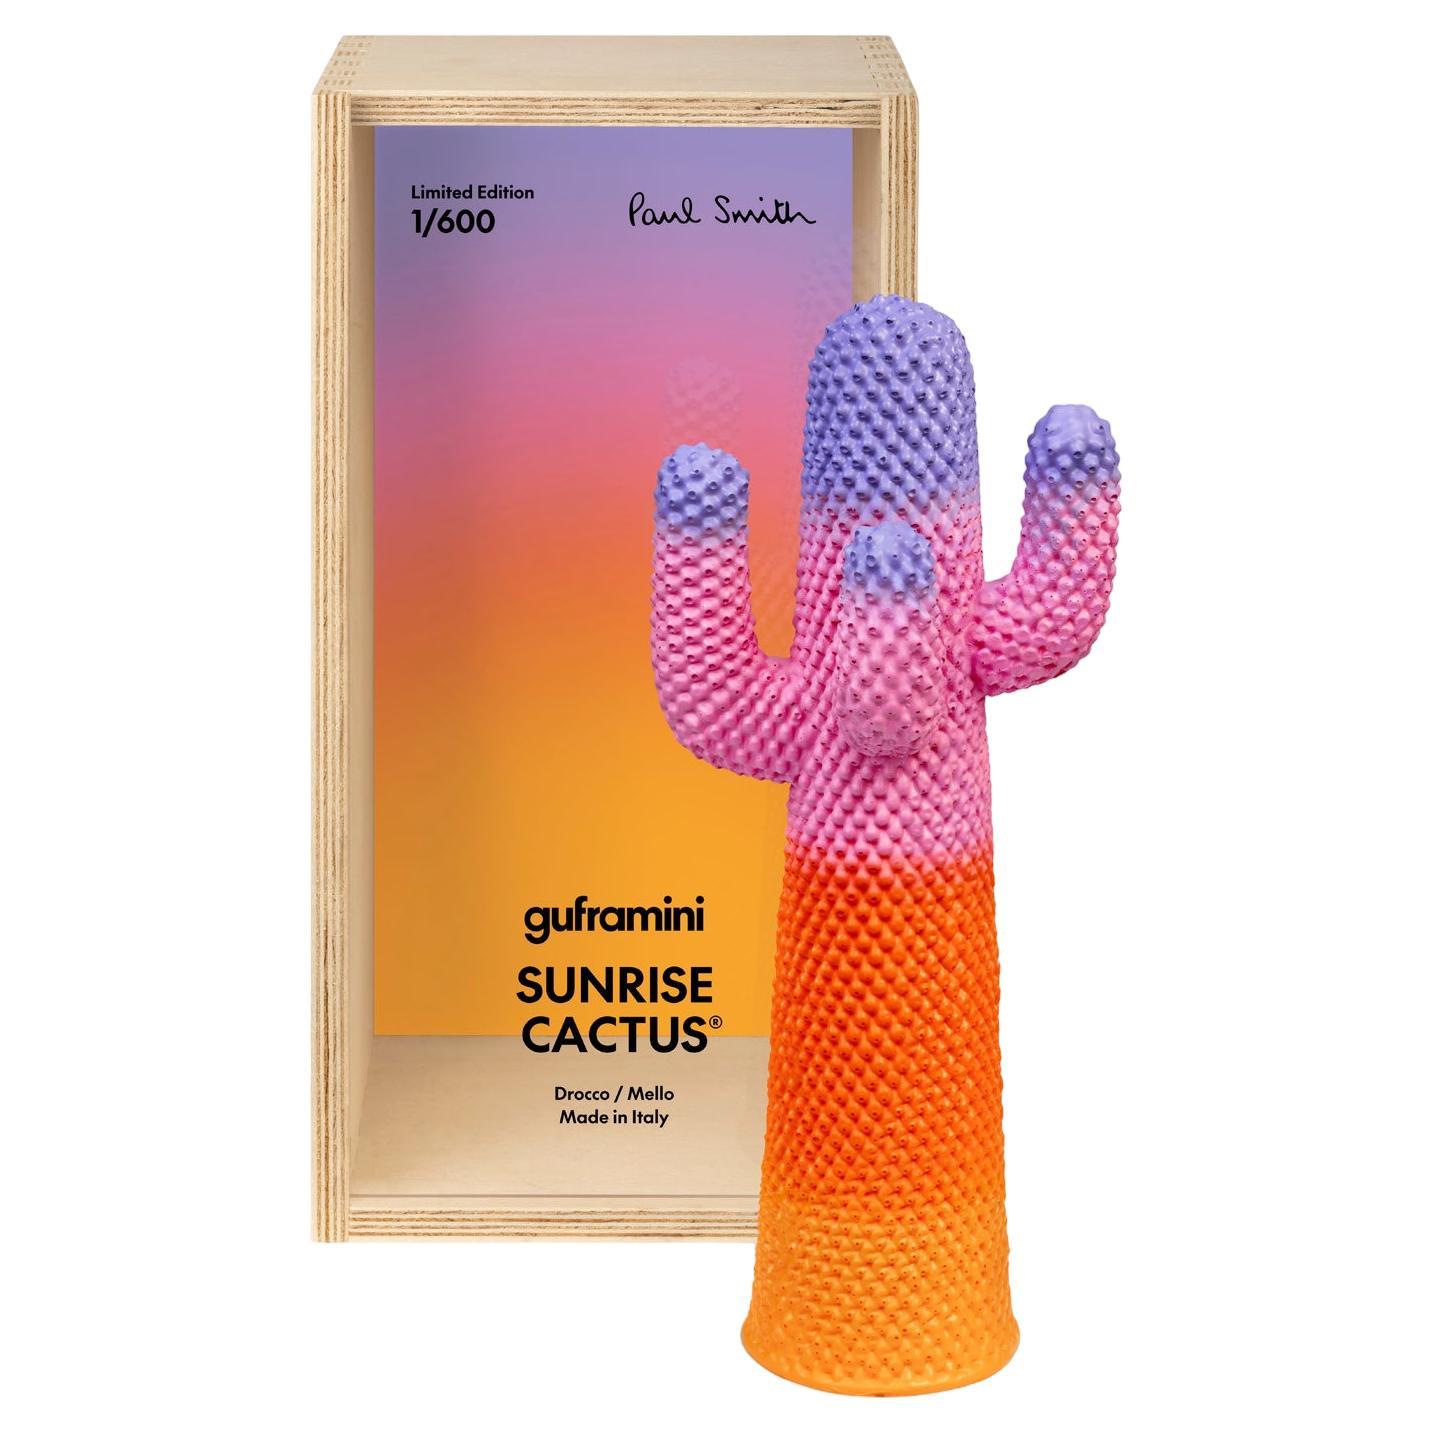 GUFRAMINI Miniature Sunrise Paul Smith Cactus by Drocco & Mello